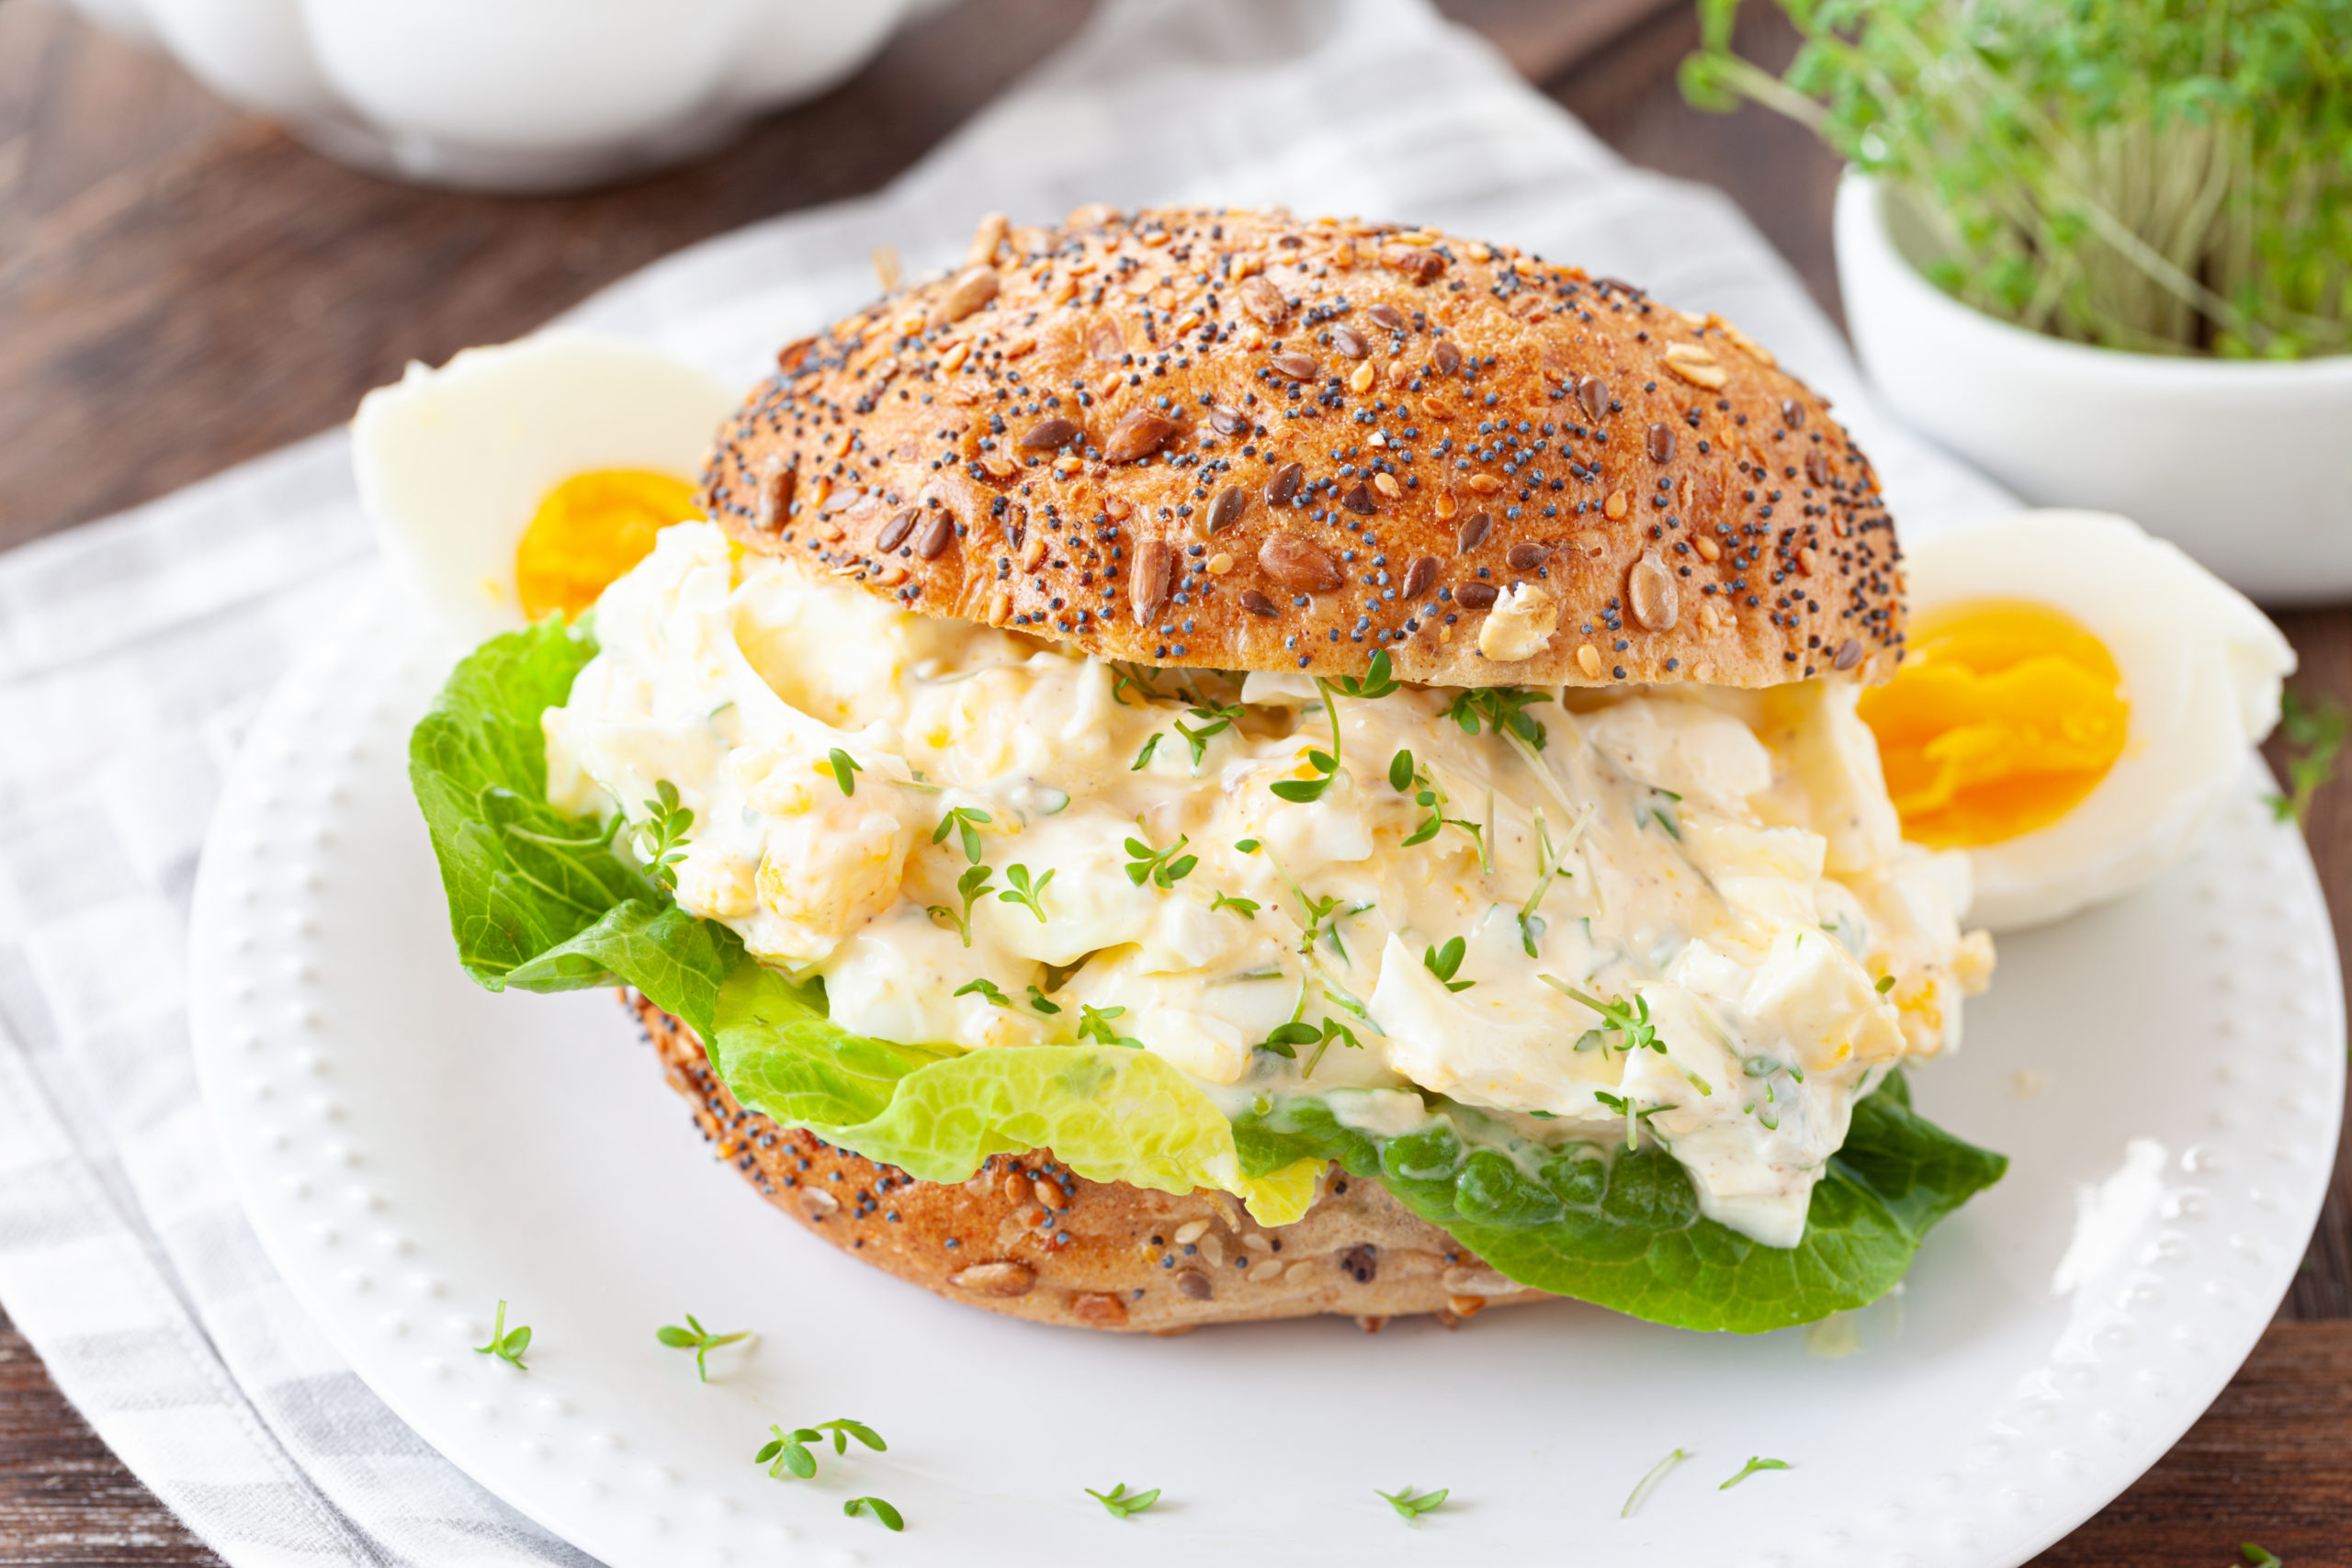 https://kikifoodland.com/wp-content/uploads/2021/05/egg-salad-sandwich-JG6ZU23-scaled.jpg